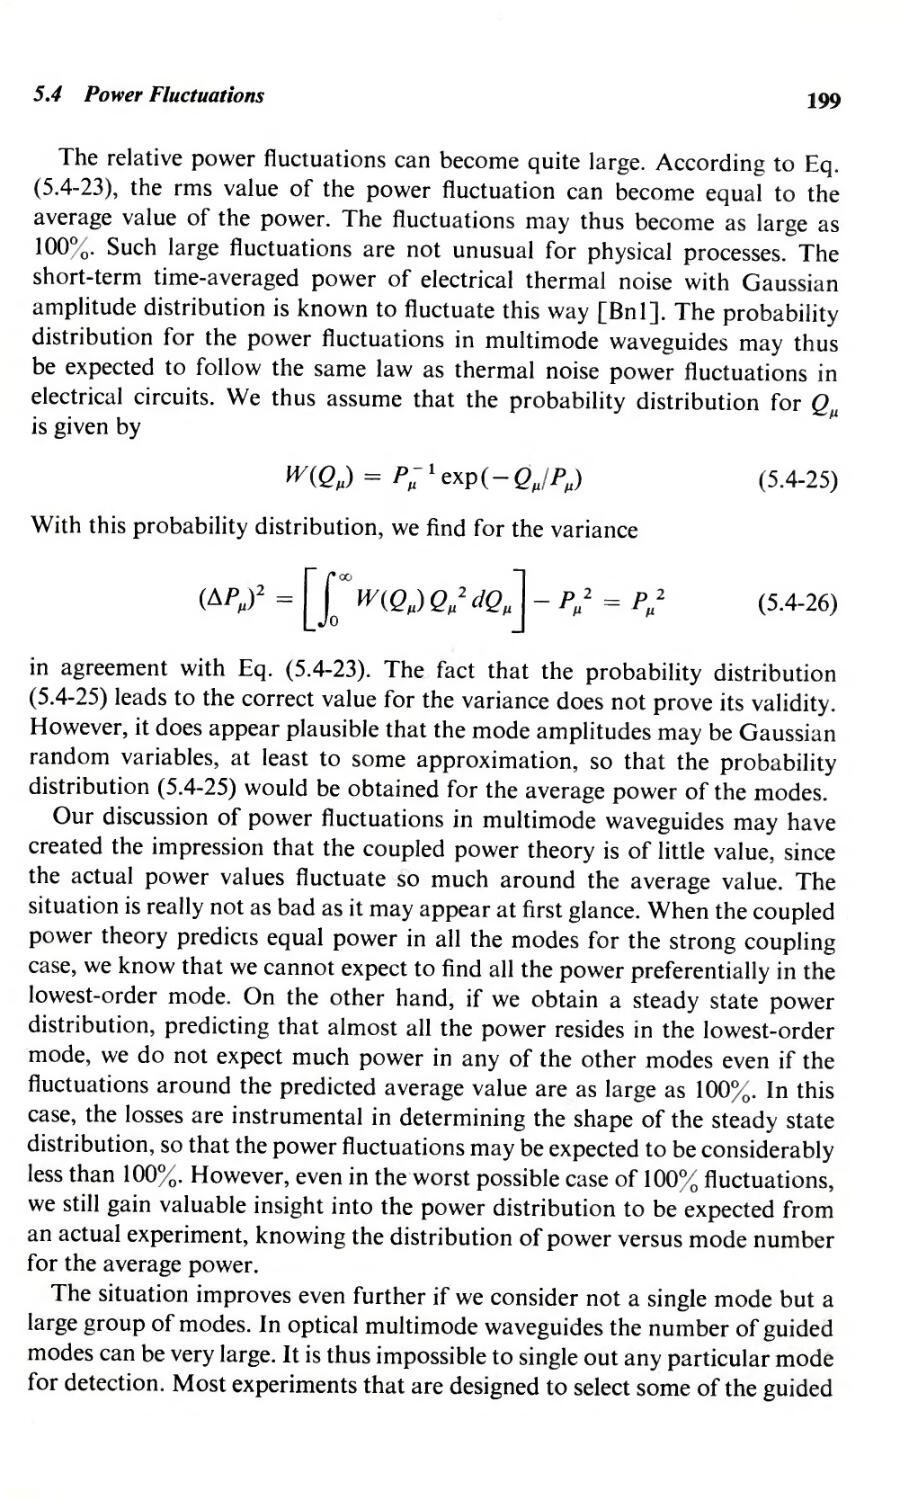 Amplitude distribution, 199
G
Probability distribution, 199